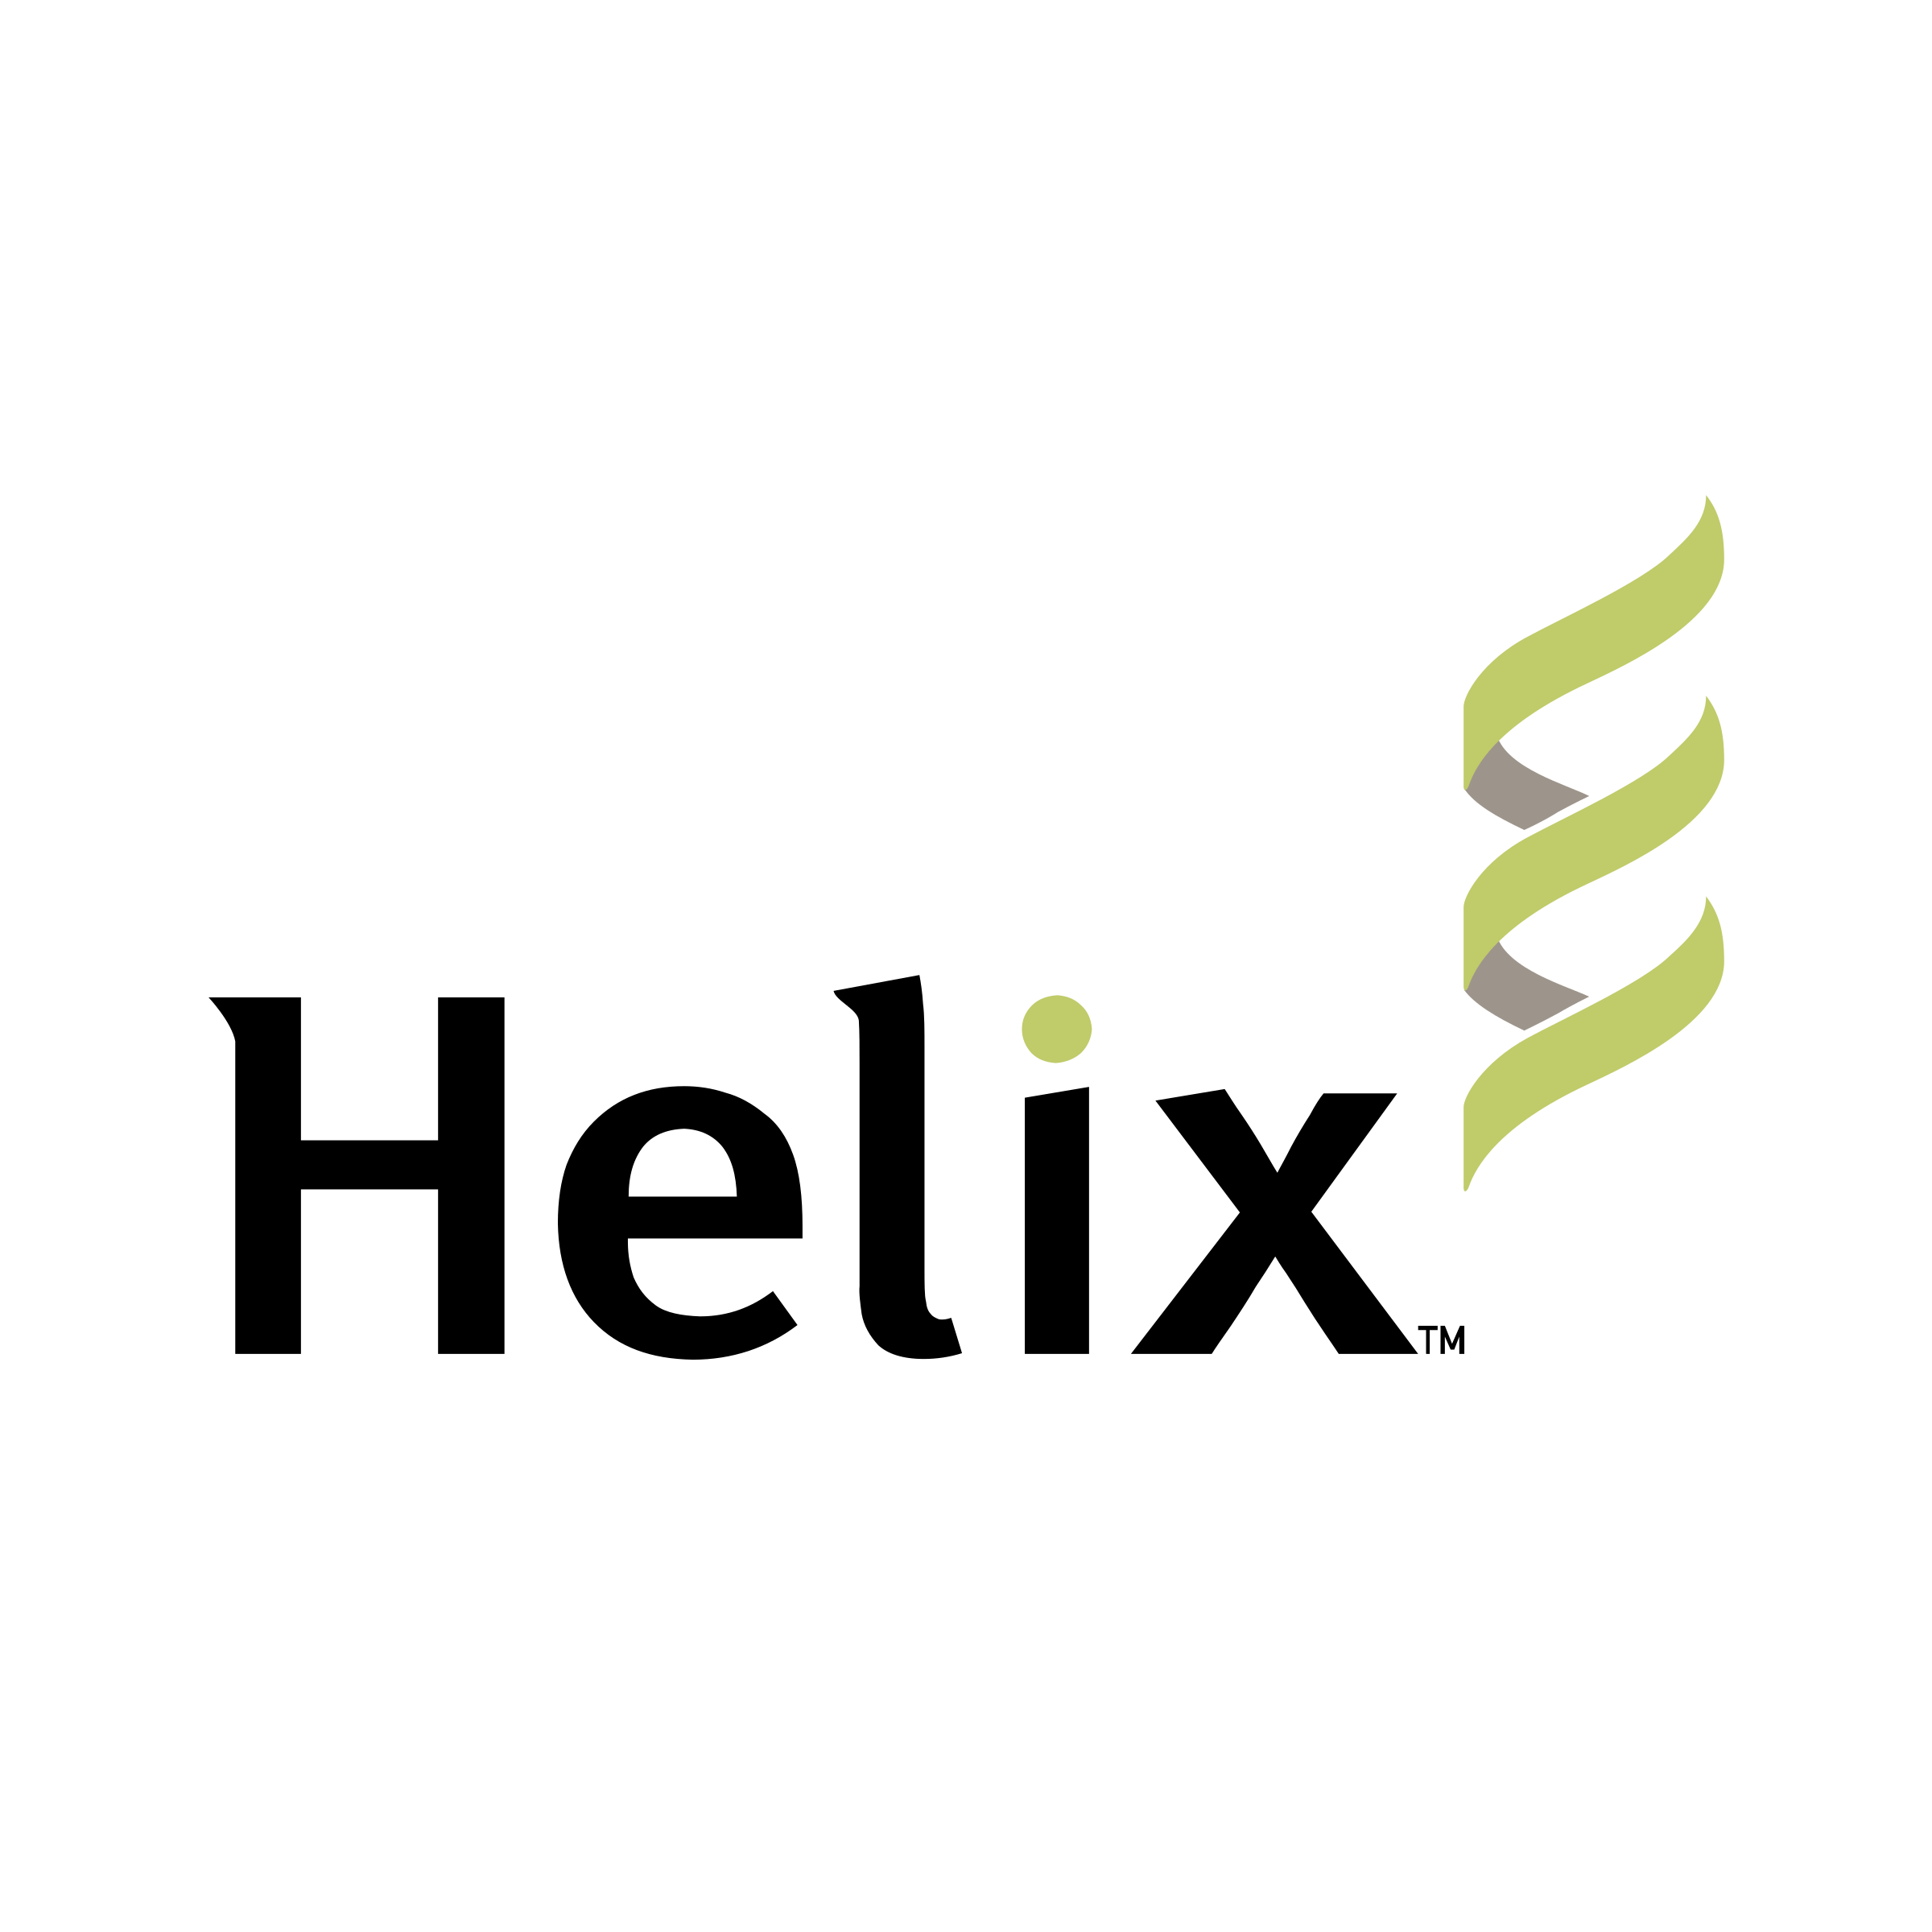 Helix Logo - Helix Logo PNG Transparent & SVG Vector